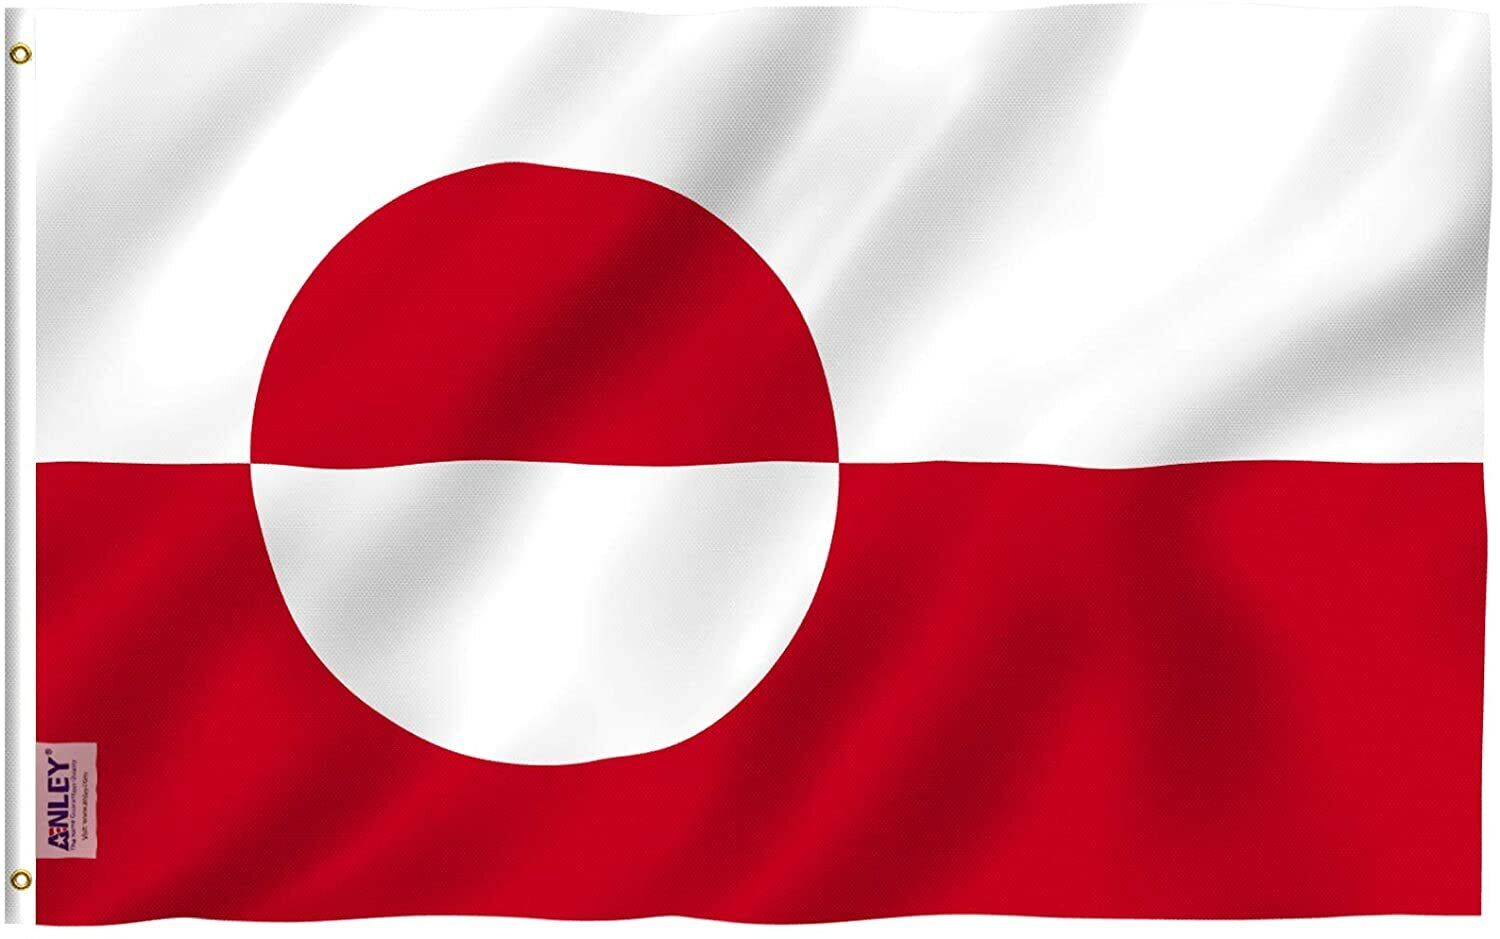 Anley Fly Breeze 3x5 Feet Greenland Flag - Greenlander Flags Polyester